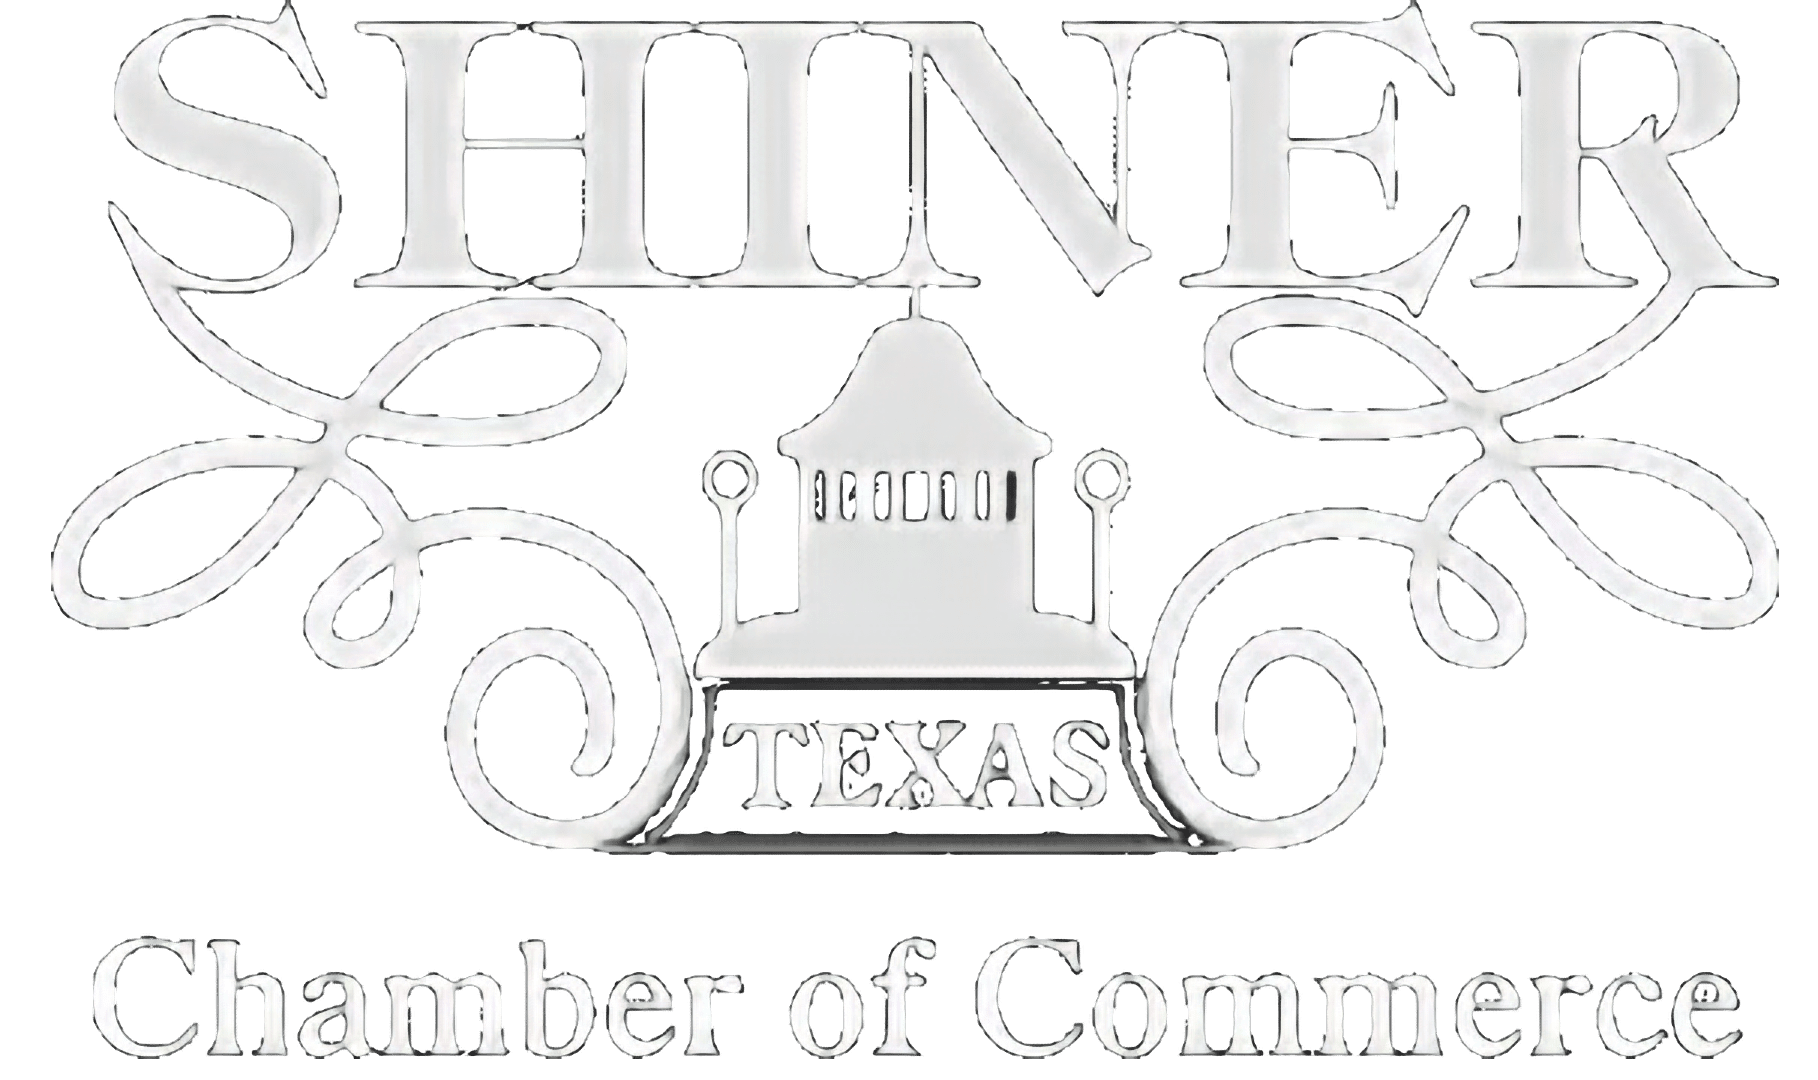 Shiner Texas Chamber of Commerce